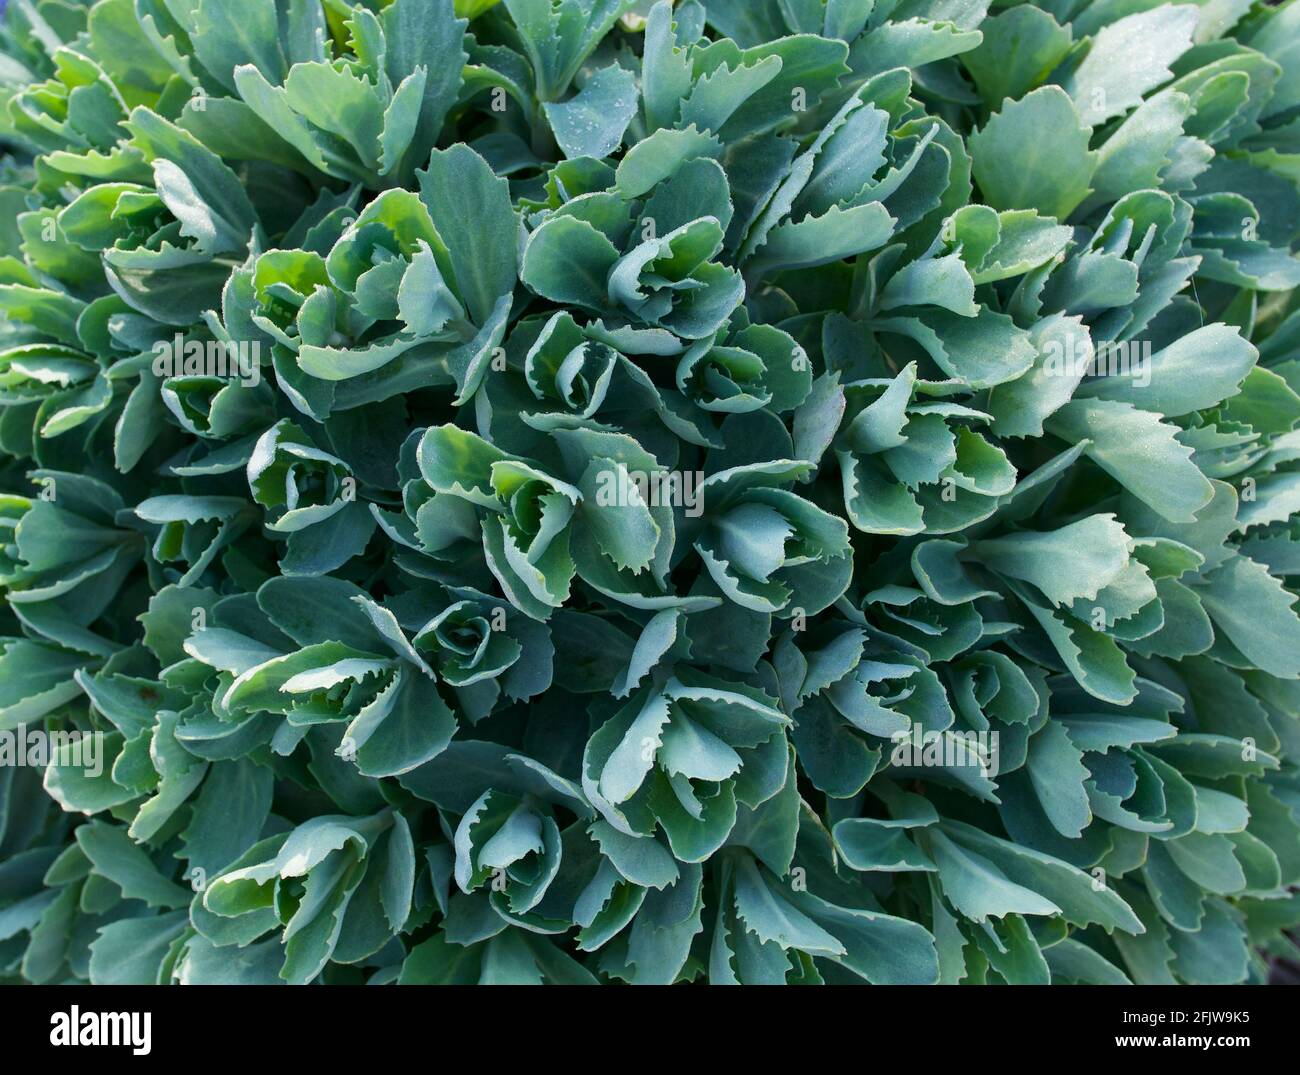 Full frame image of pale green sedum or ice plant foliage Stock Photo